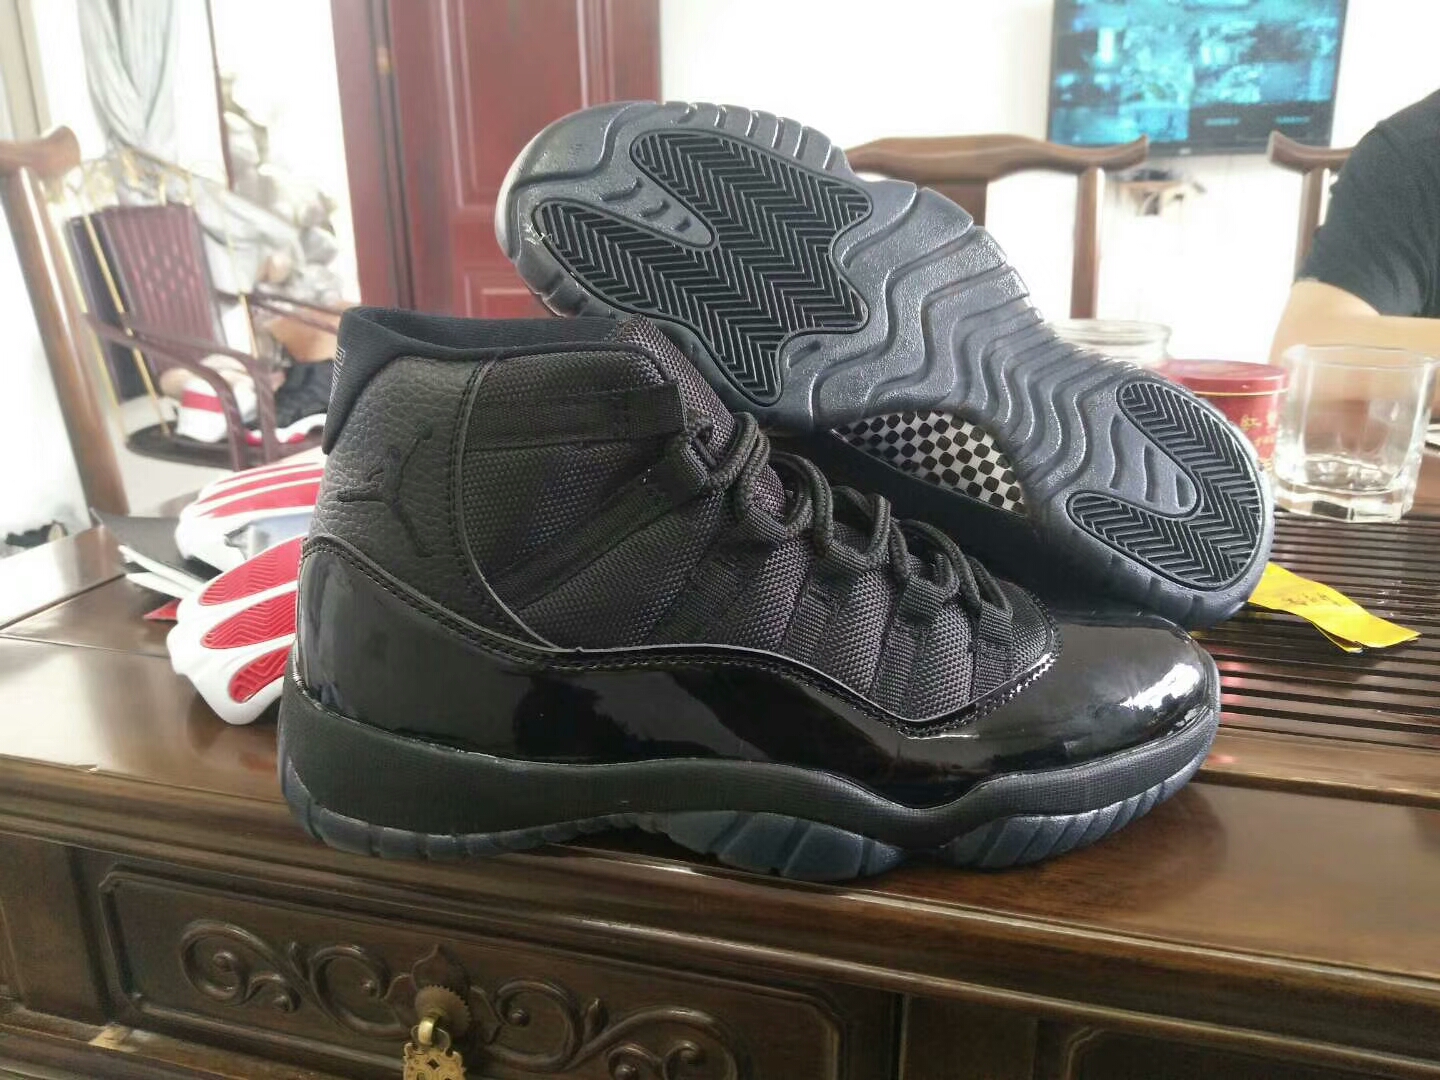 New Air Jordan 11 Retro All Black Shoes